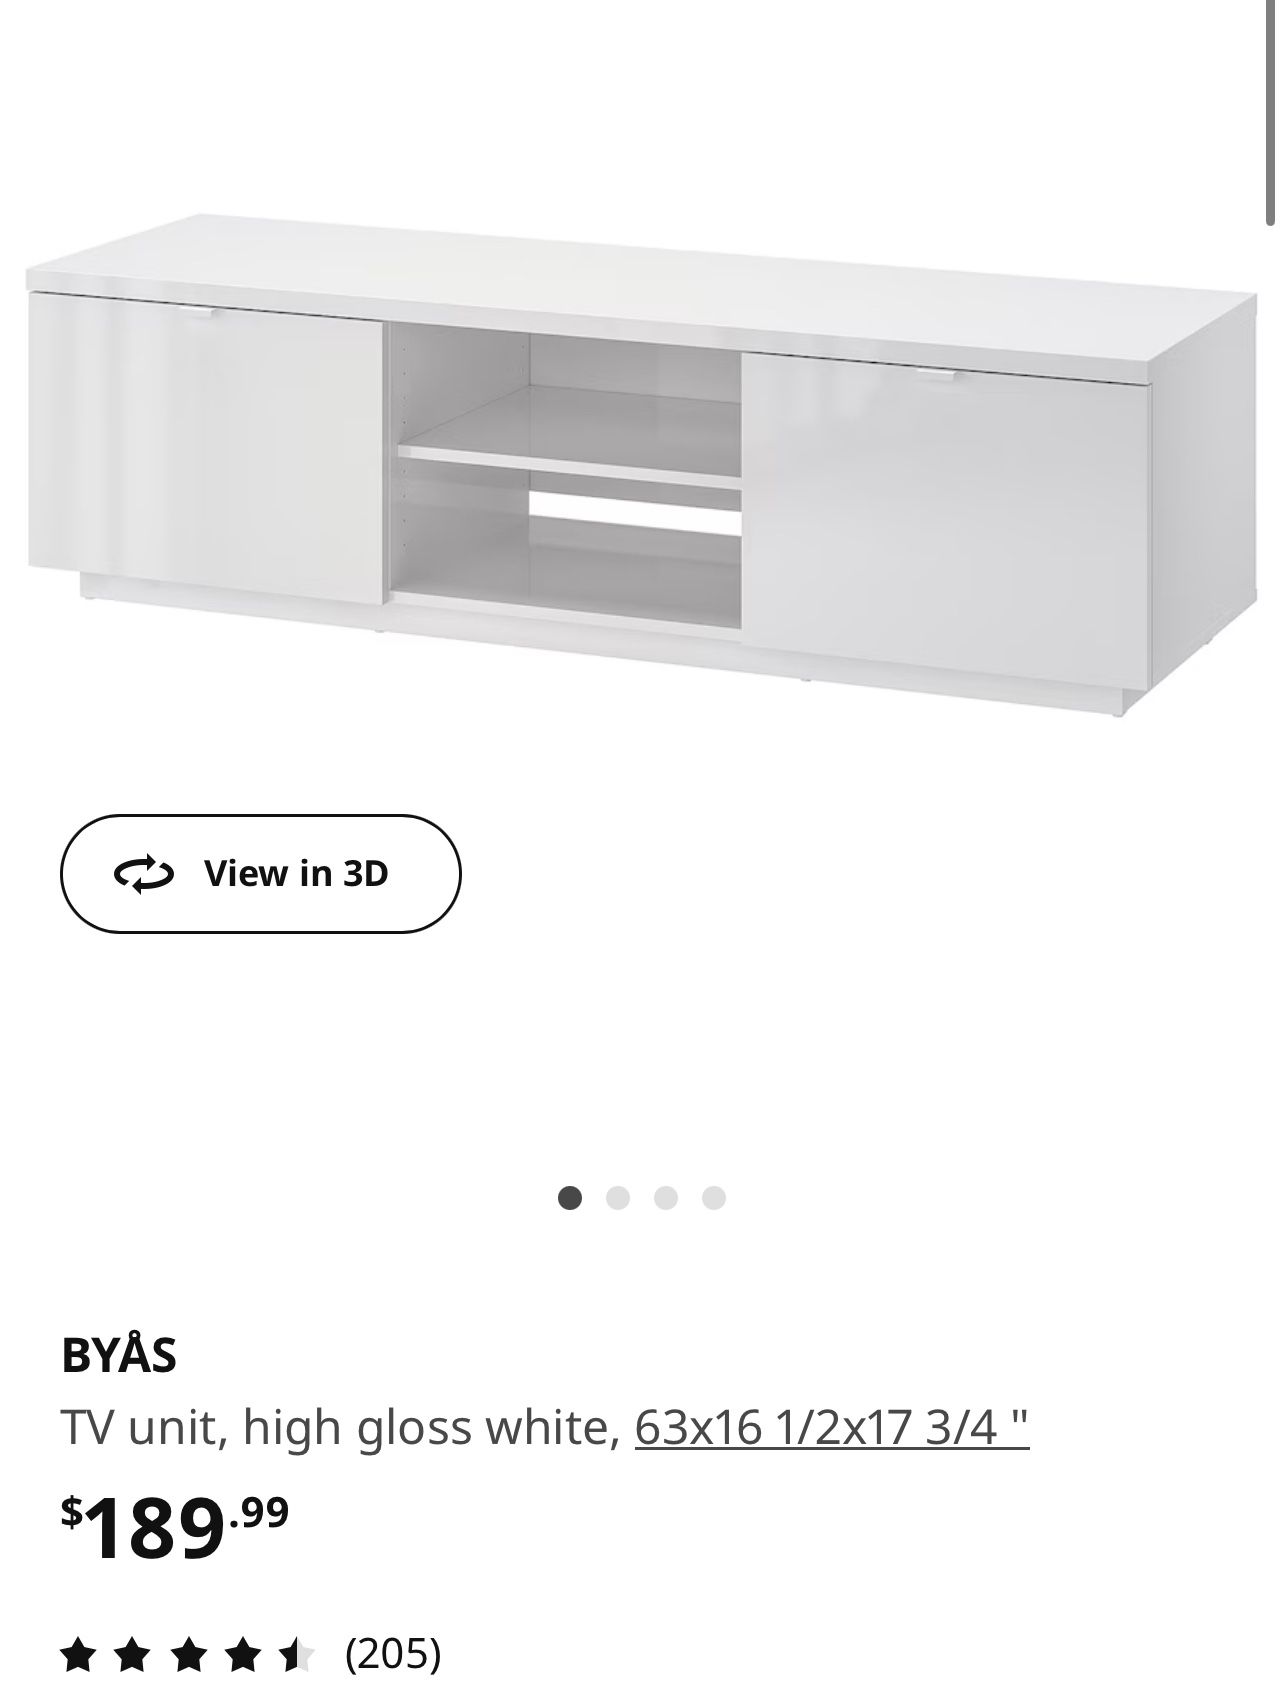 IKEA byas Tv Stand 